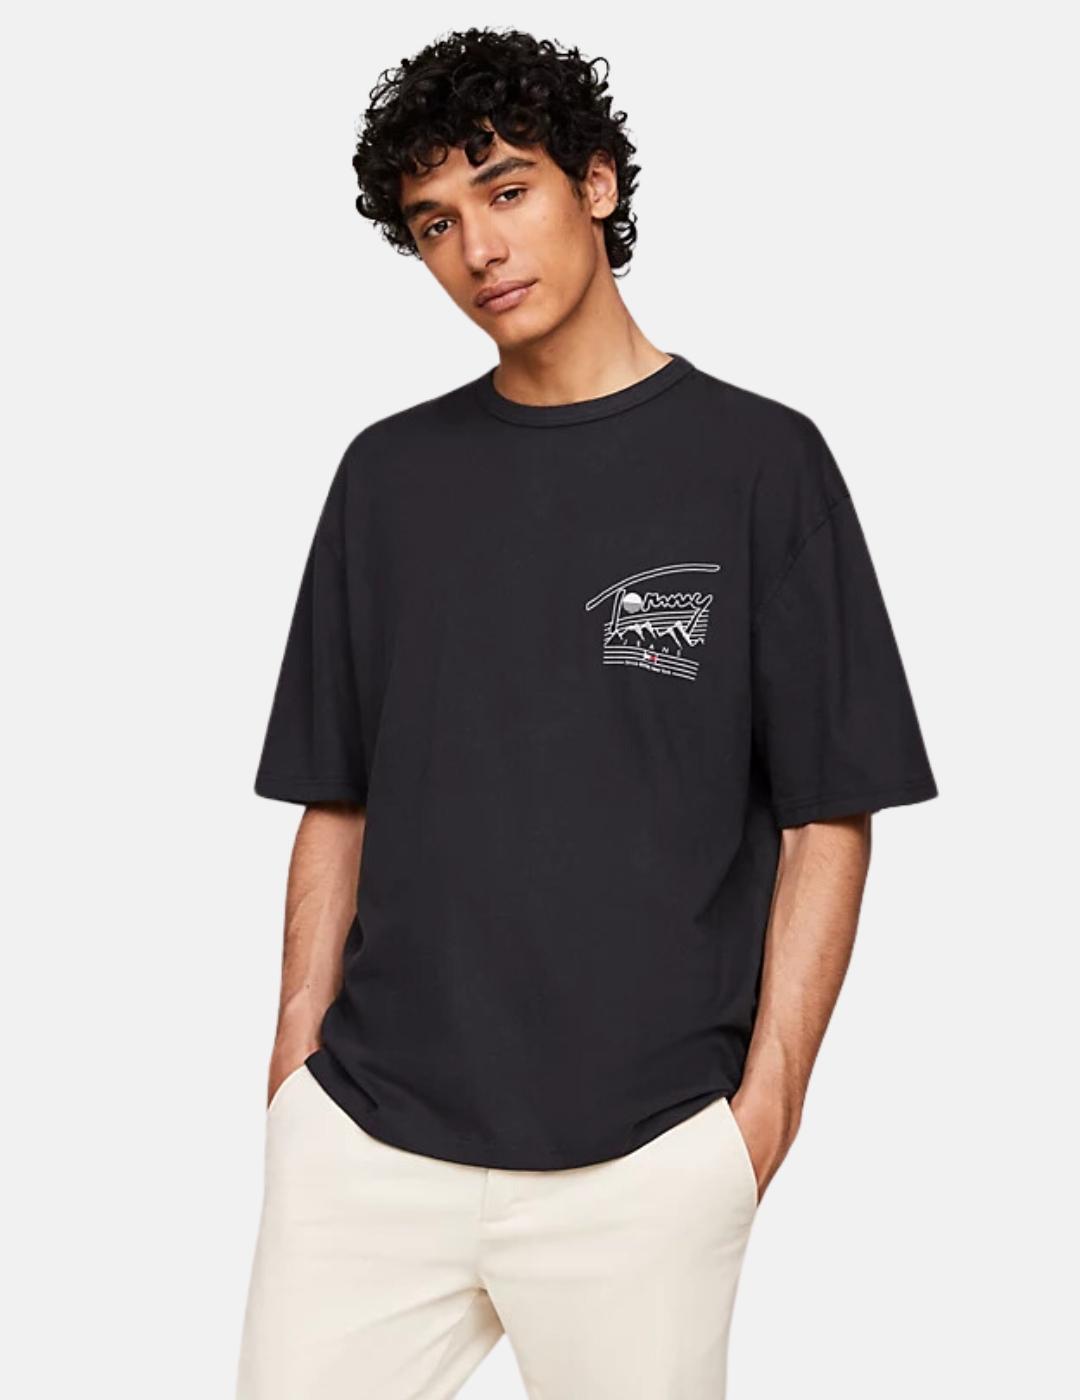 Camiseta Tommy Jeans hombre over negra con logo blanco